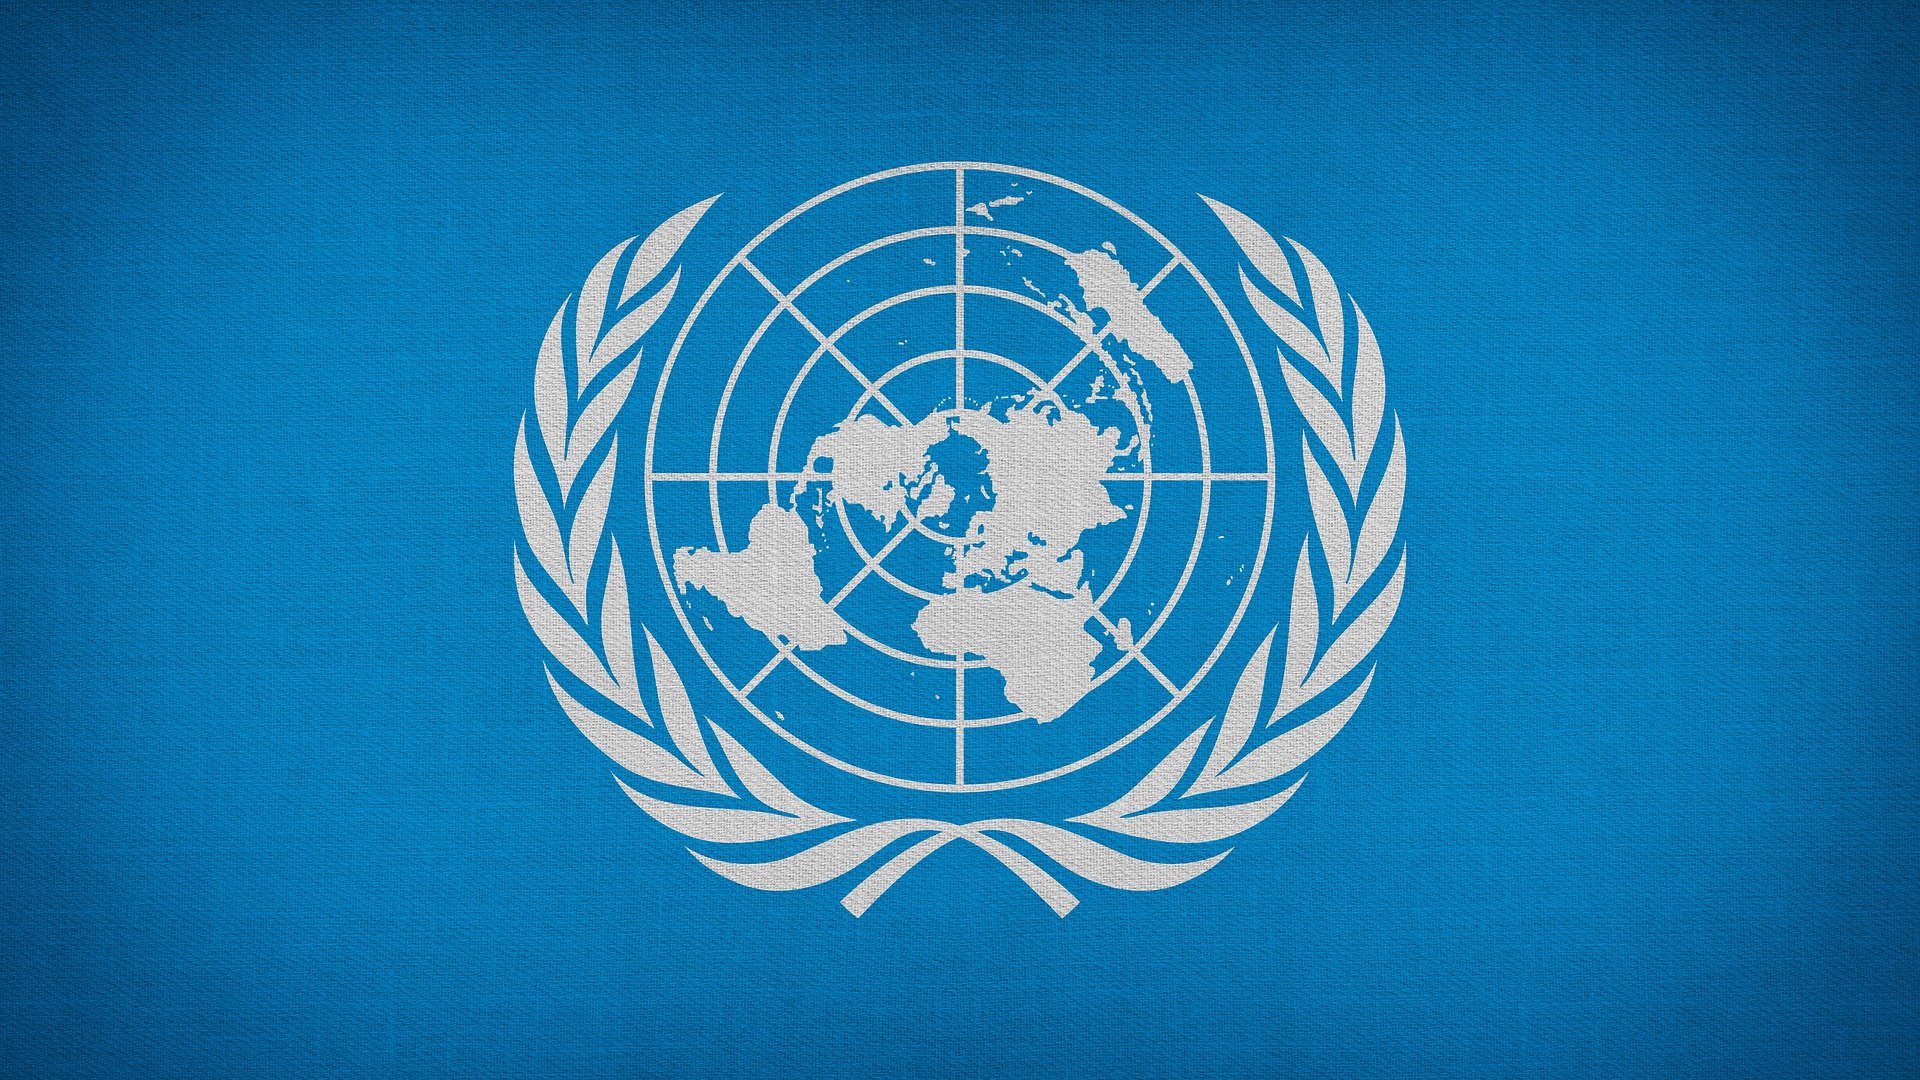 Indonesia initiates U.N. resolution on global health resilience